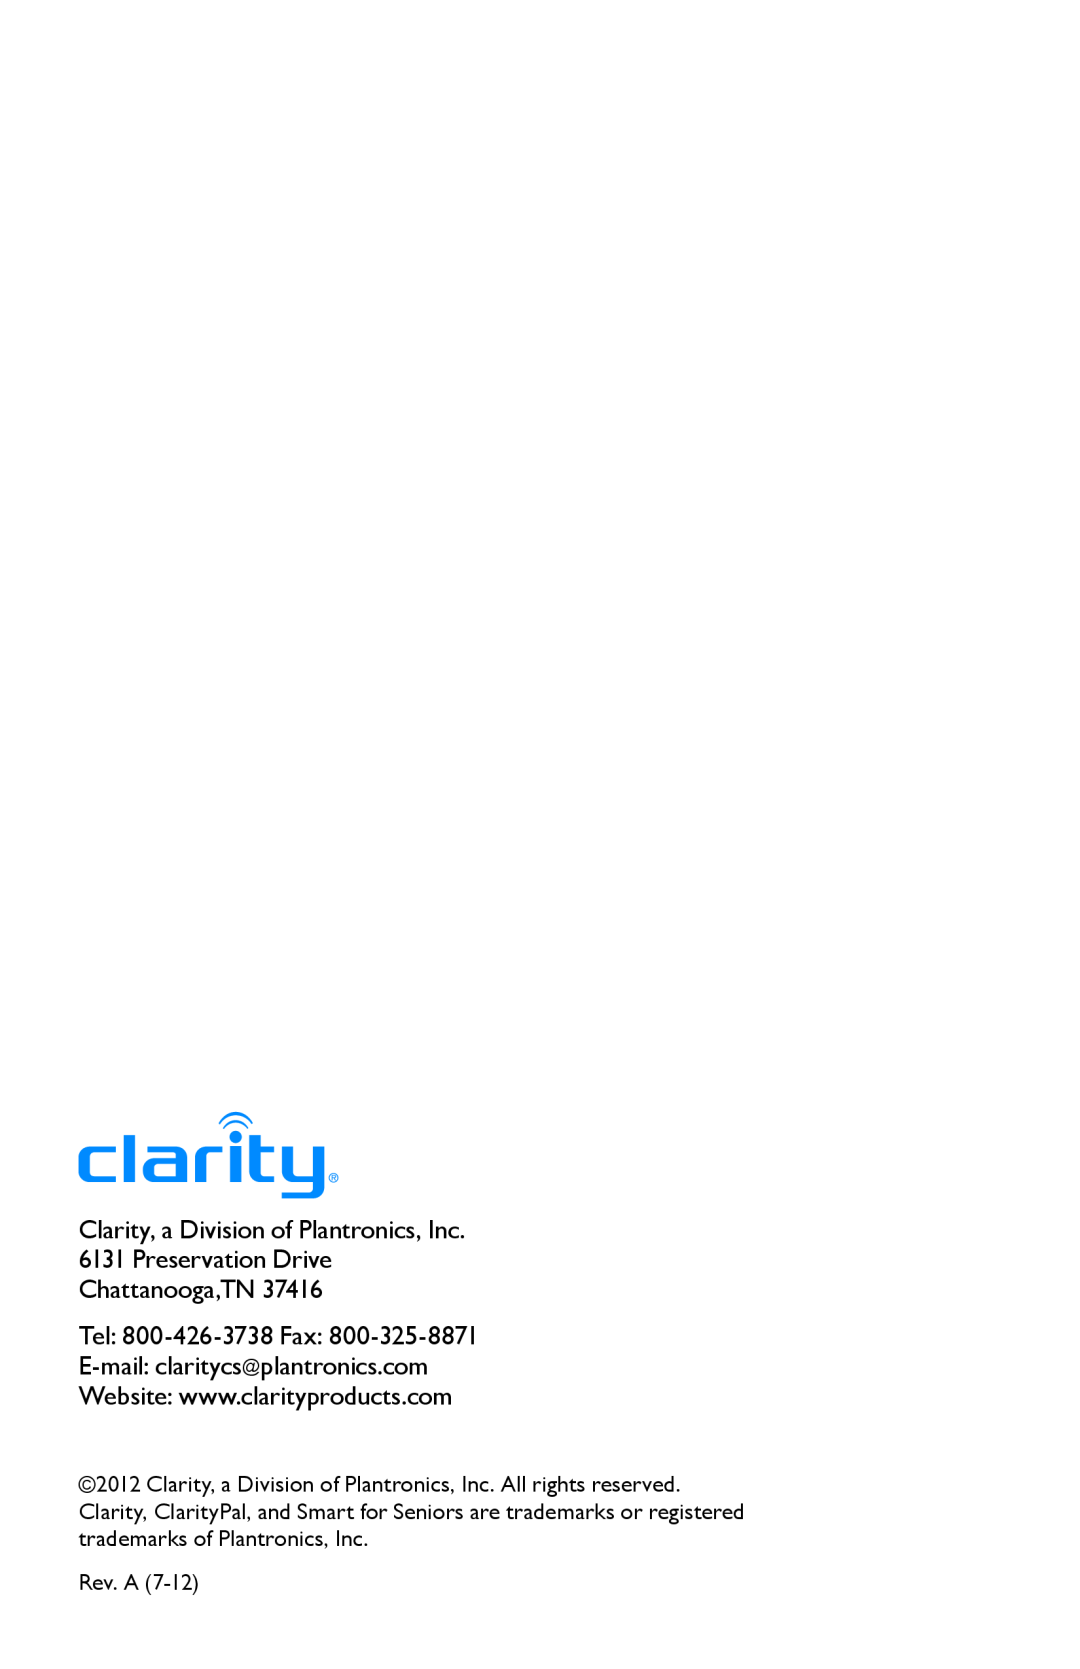 Clarity Pal manual Tel 800-426-3738 Fax E-mail claritycs@plantronics.com, Rev. A 